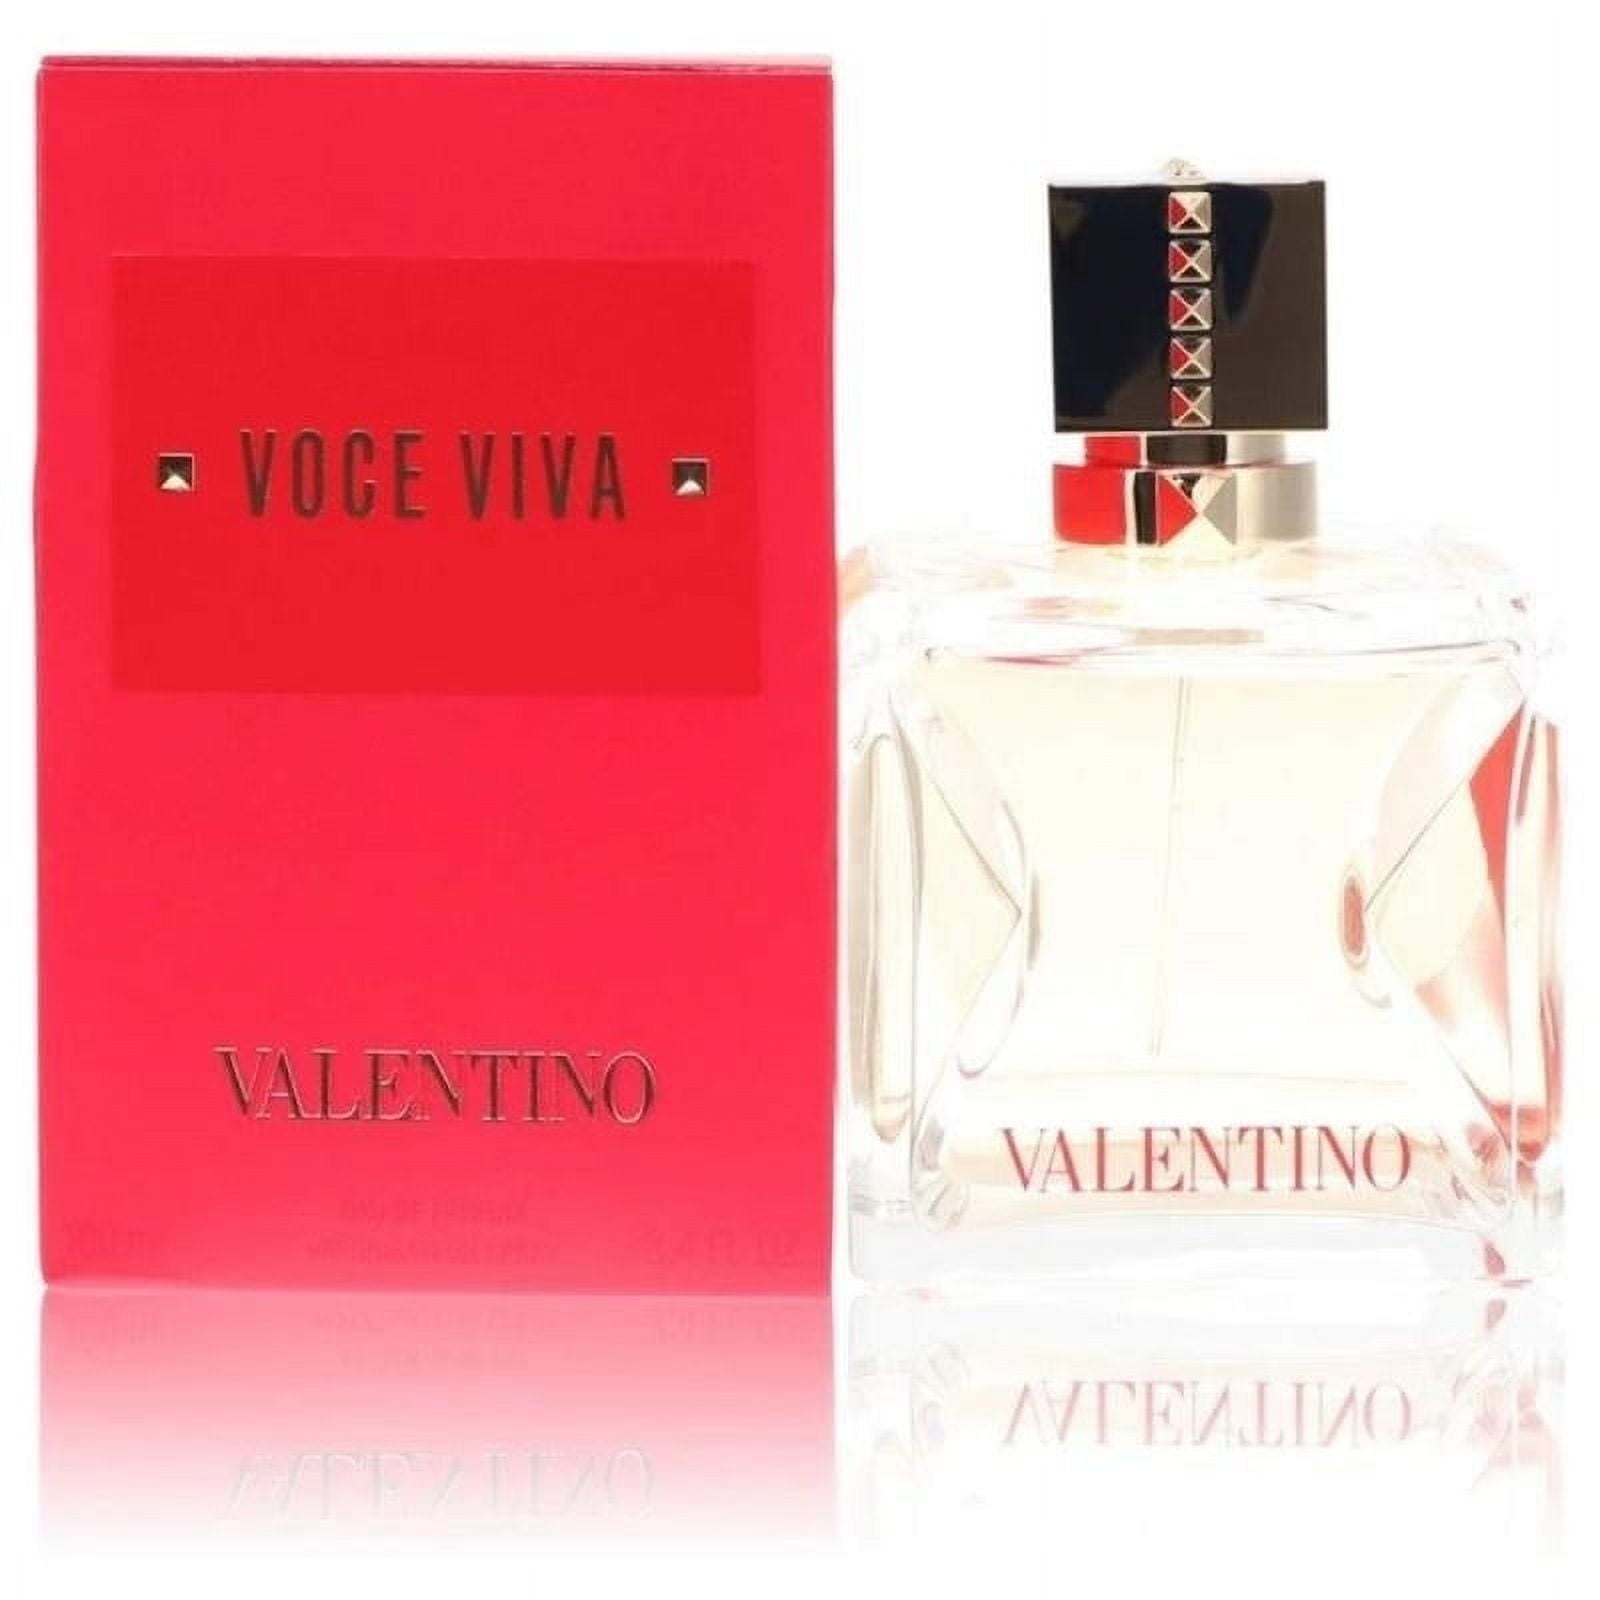 Inspired by Valentino's Voce Viva - Woman Perfume - Powdery Orange Flower - Black Friday